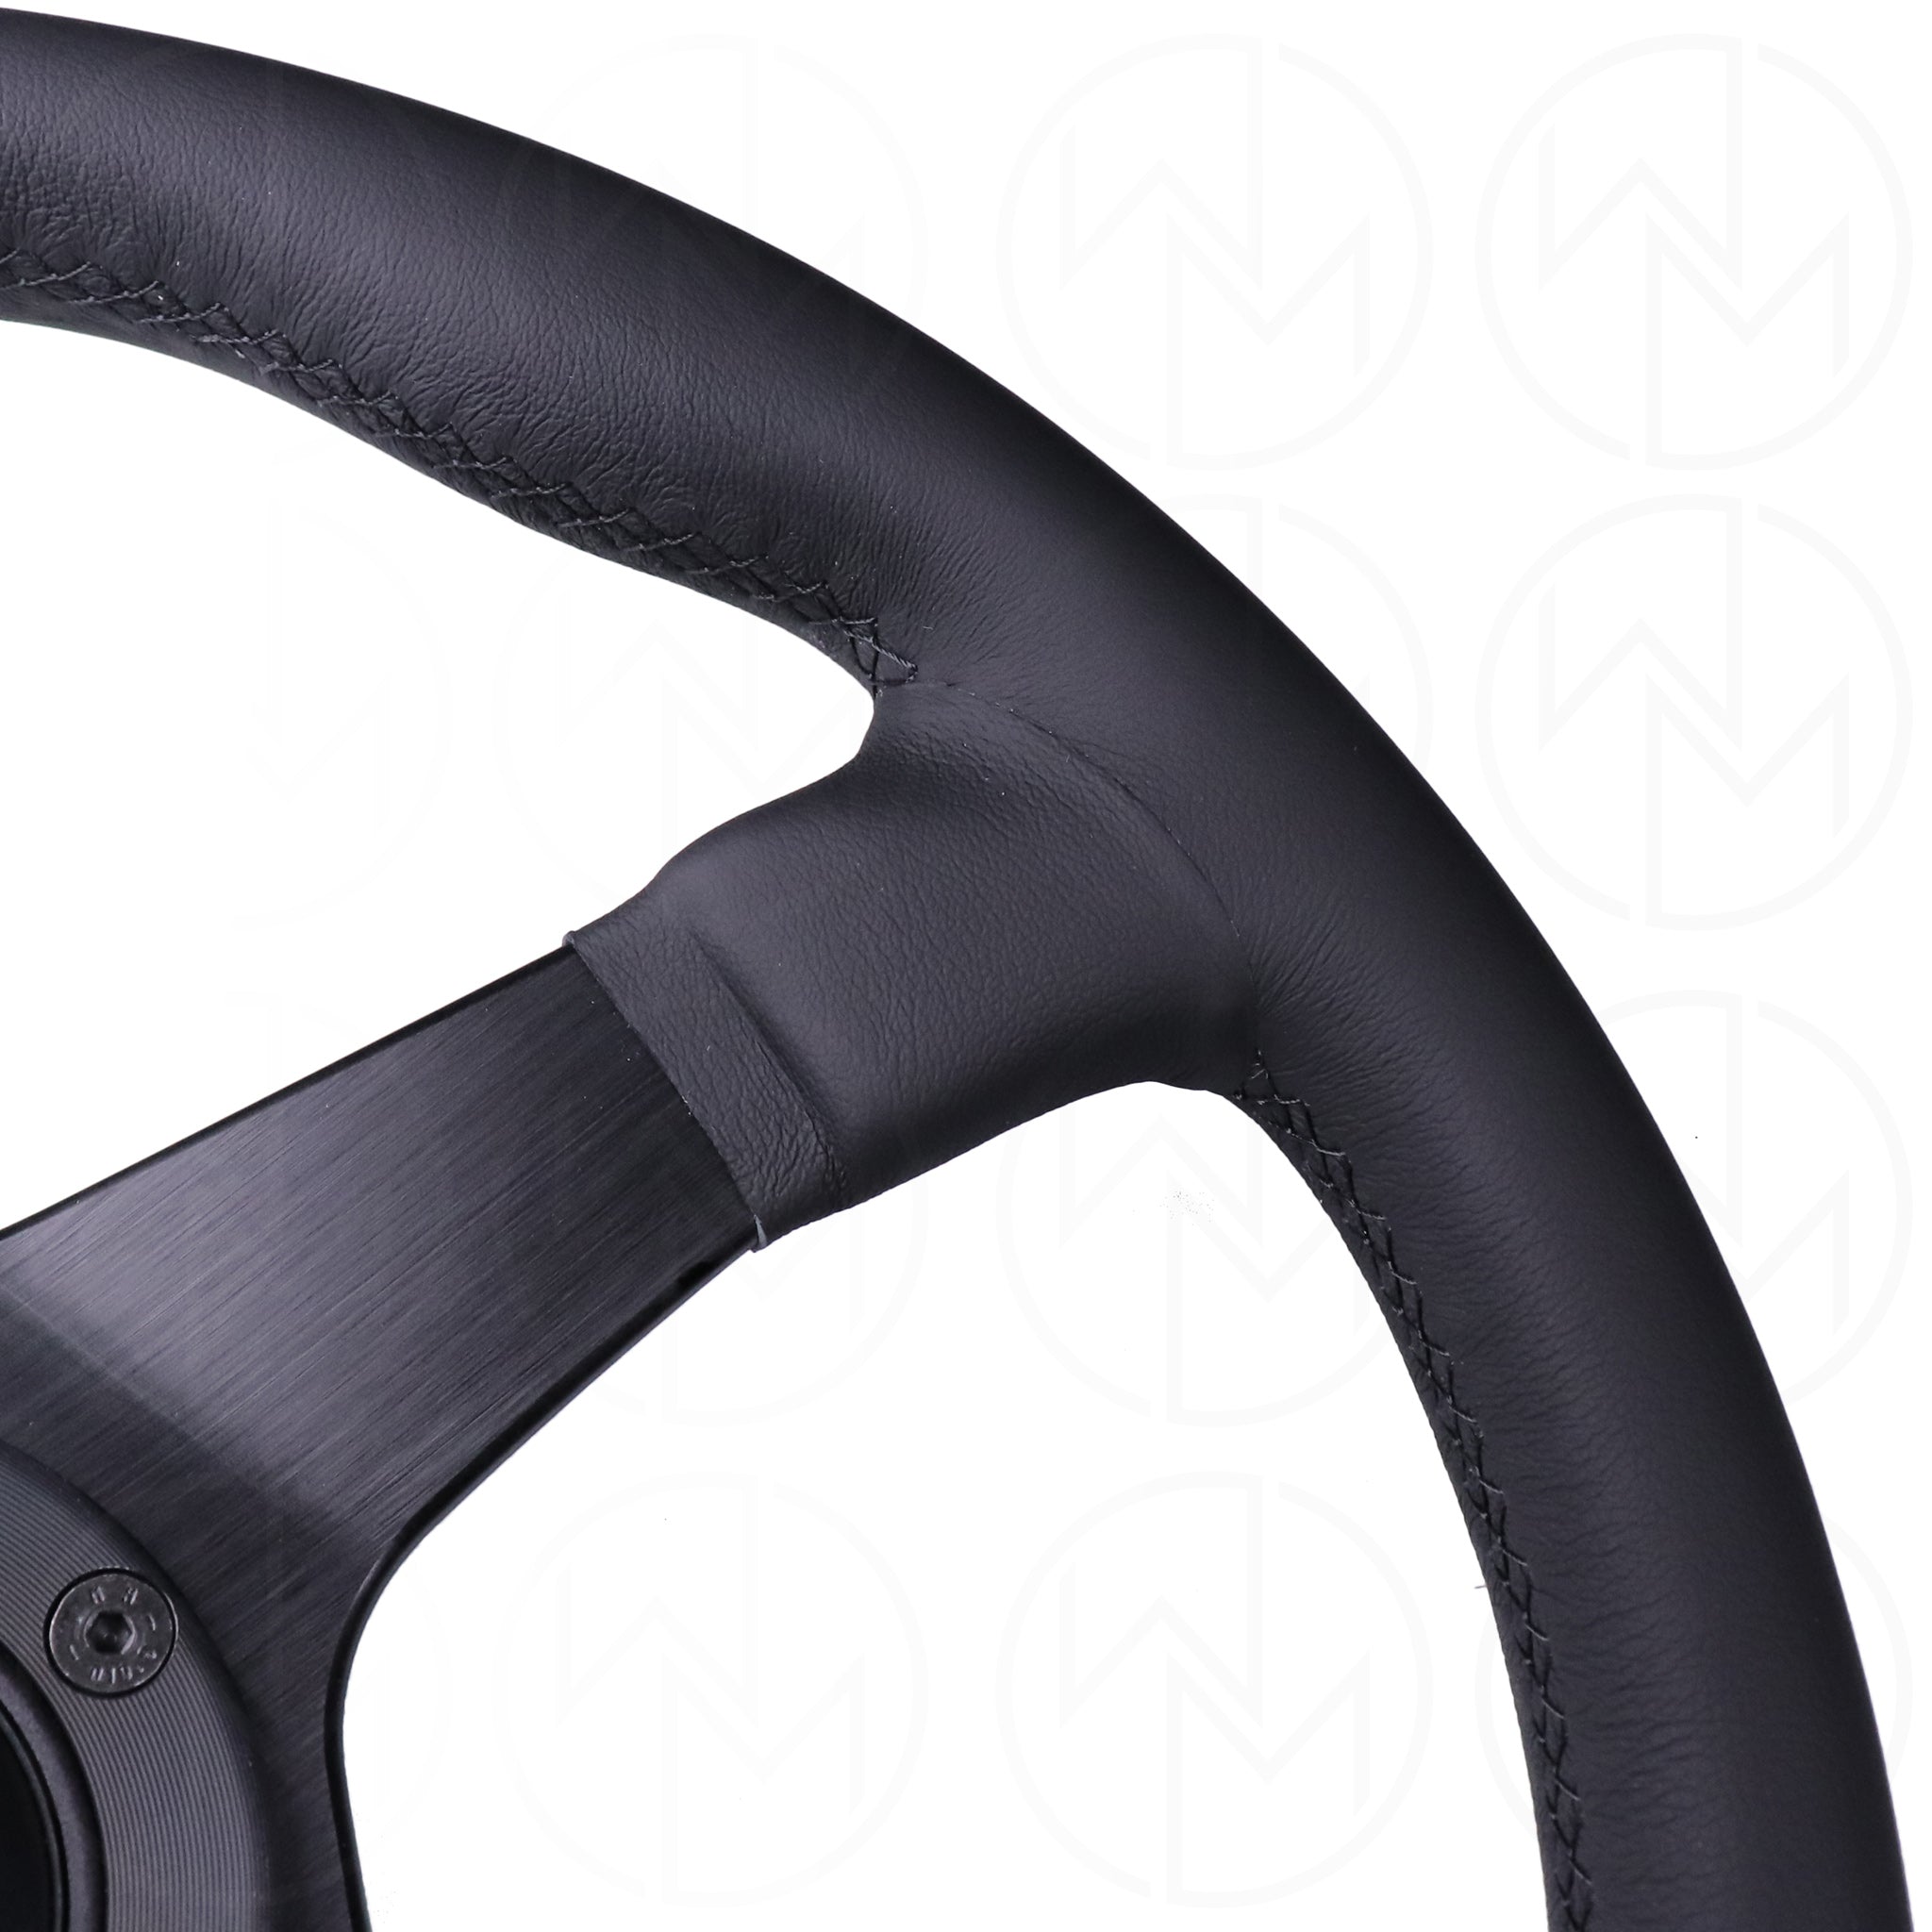 Nardi Gara Steering Wheel - 350mm Leather w/Black Stitch